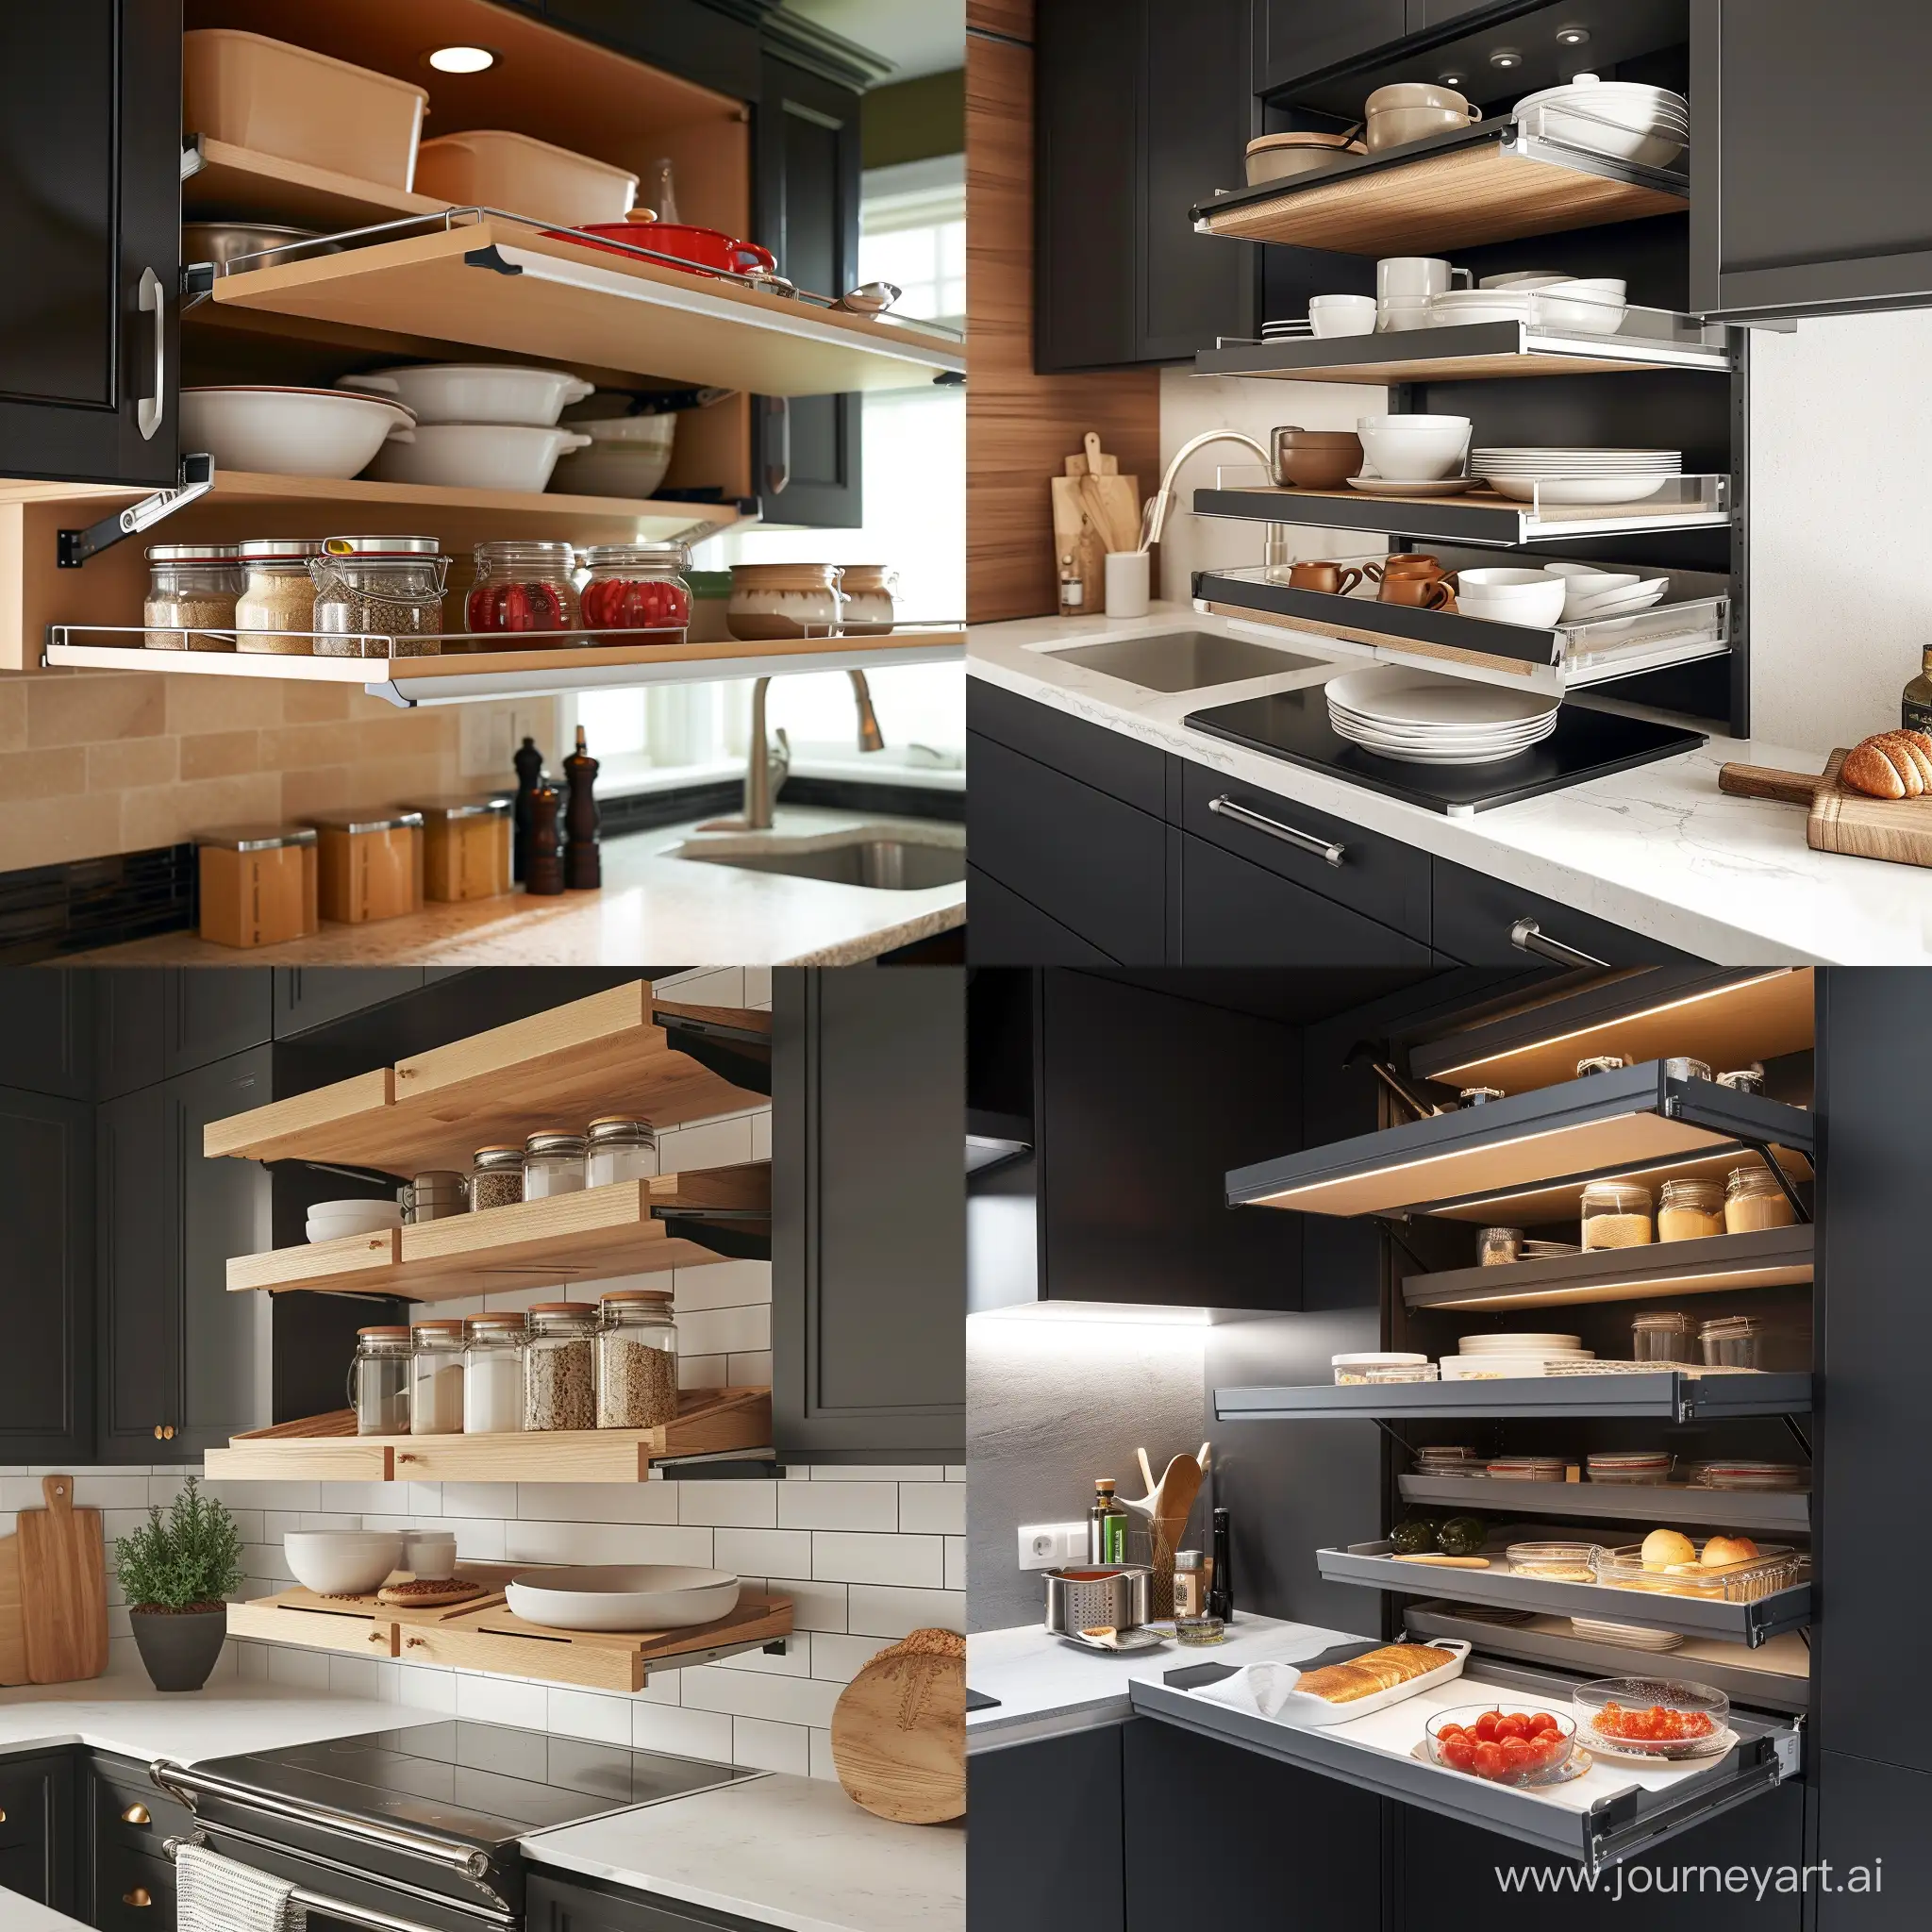 Efficient-Overhead-Kitchen-Storage-with-GlideOut-Shelves